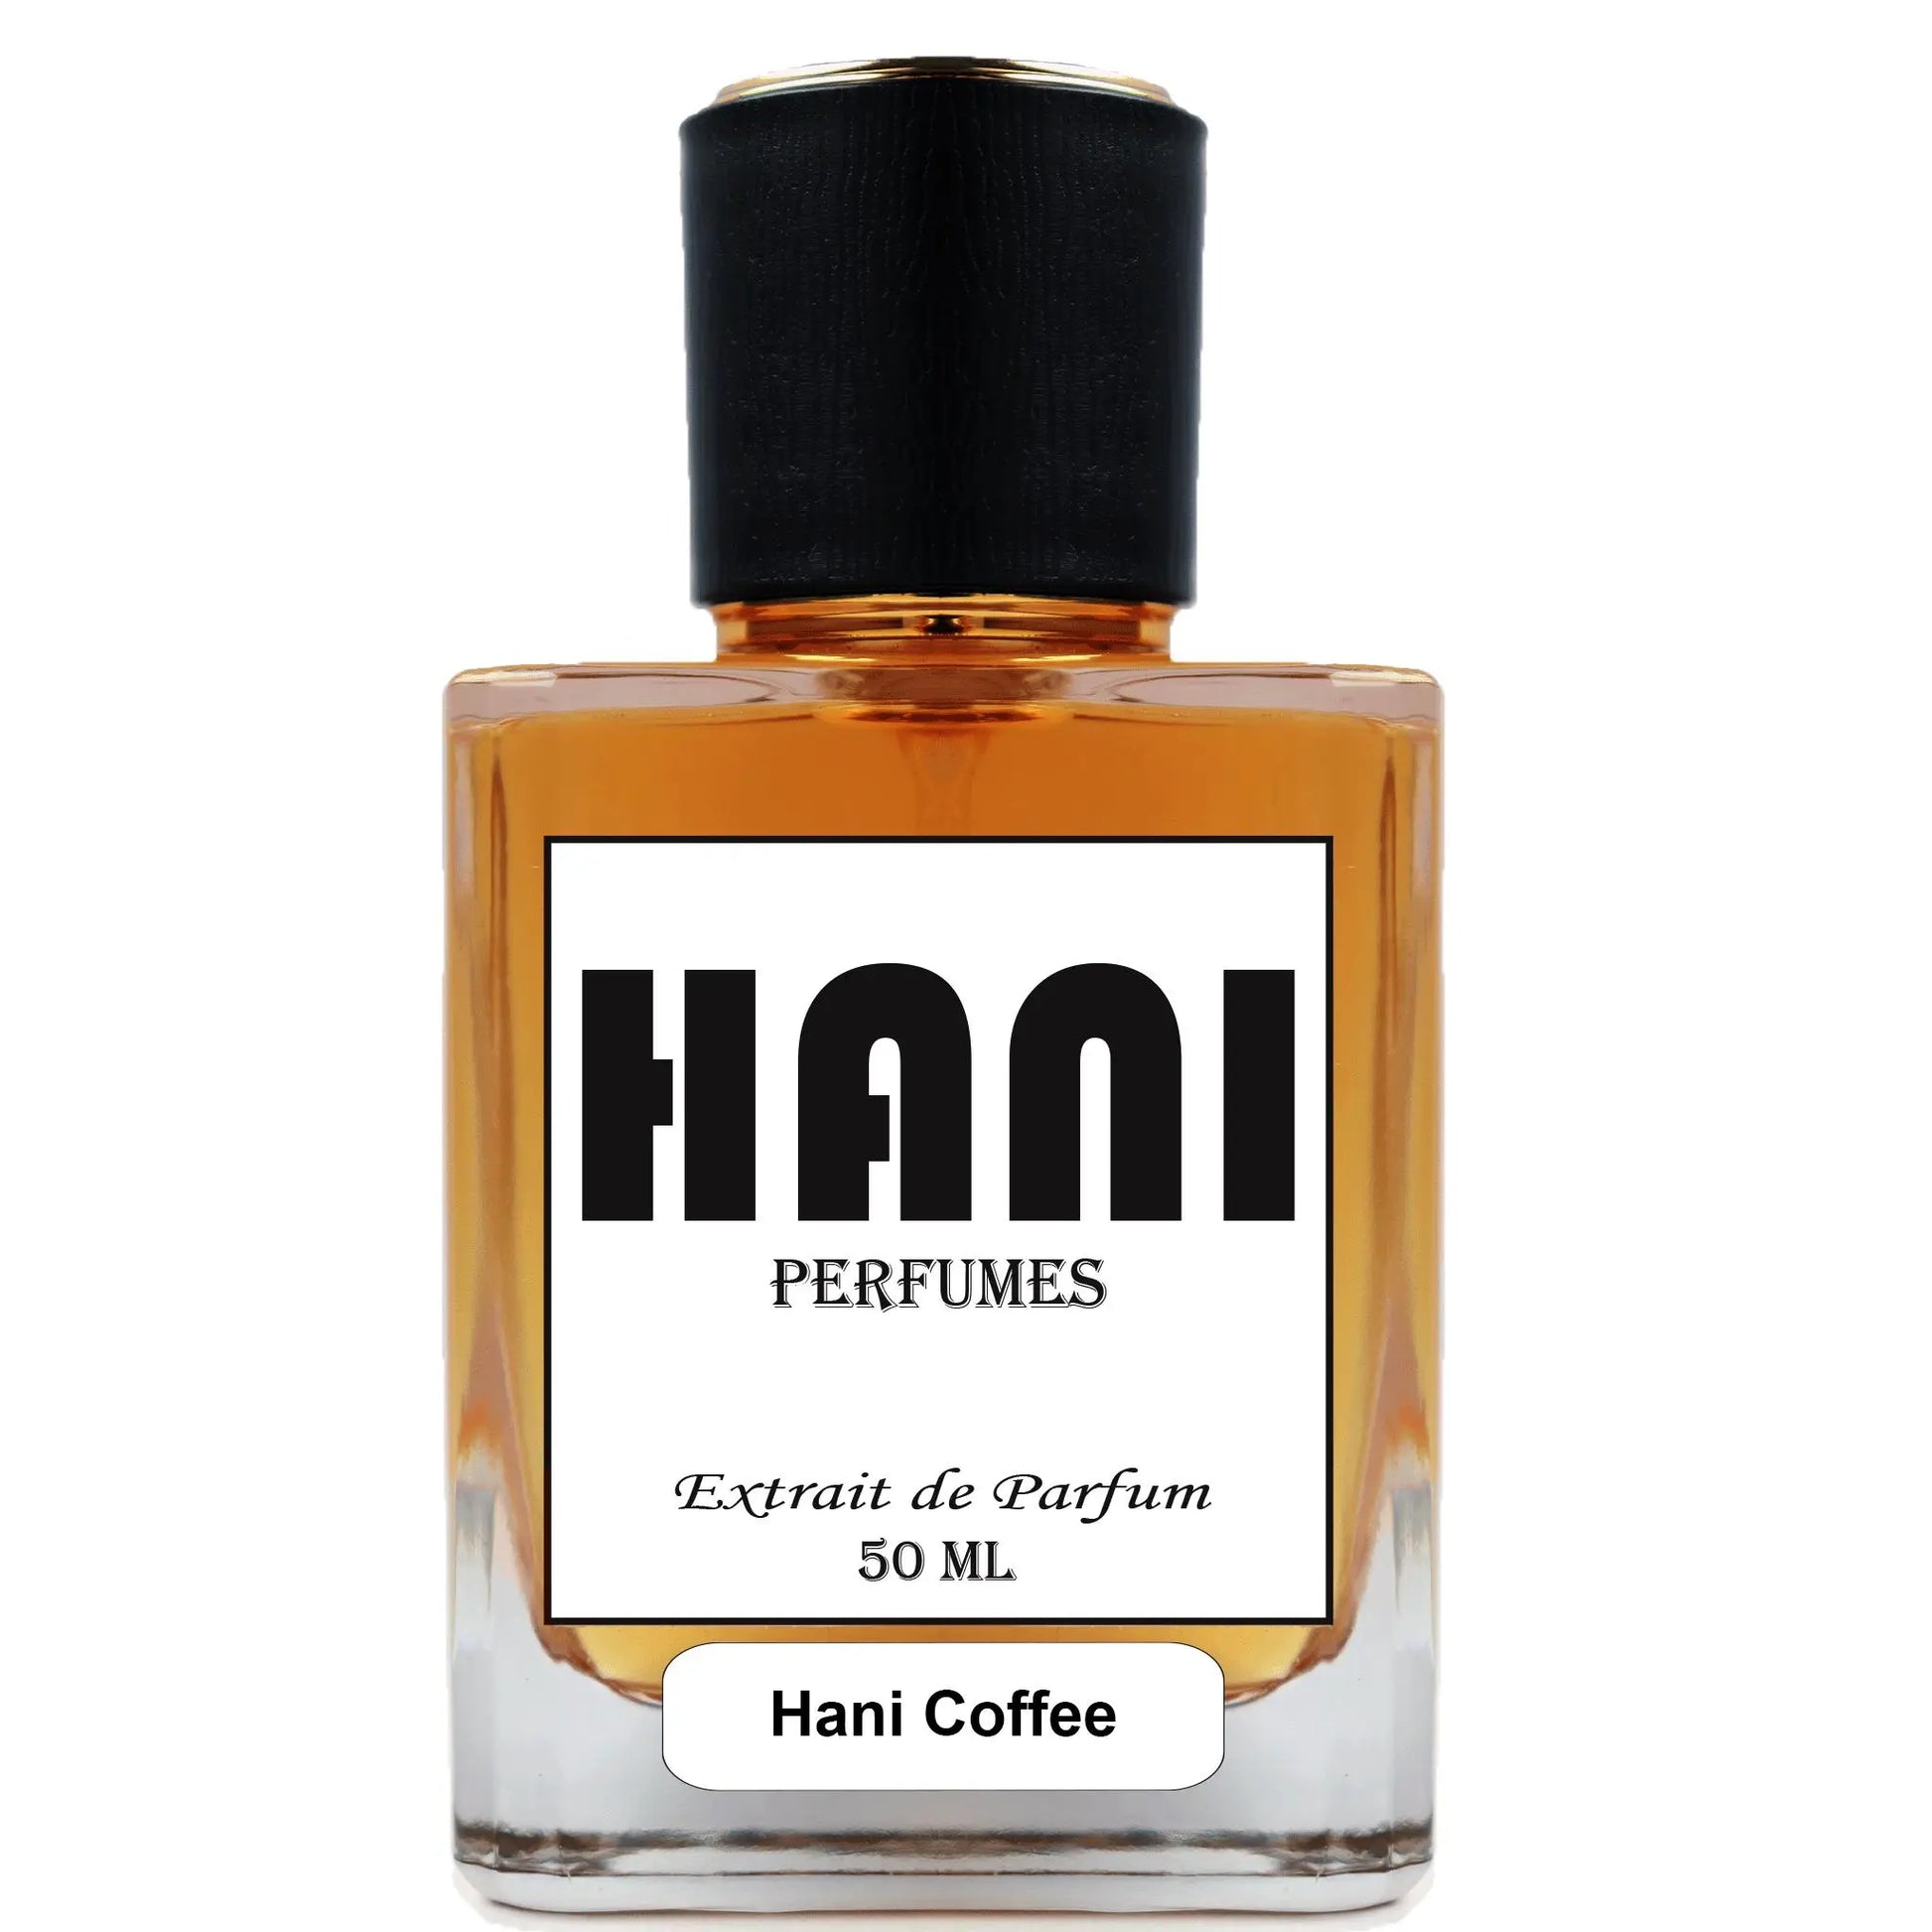 Hani Coffee Hani Perfumes duftzwilling parfum dupe